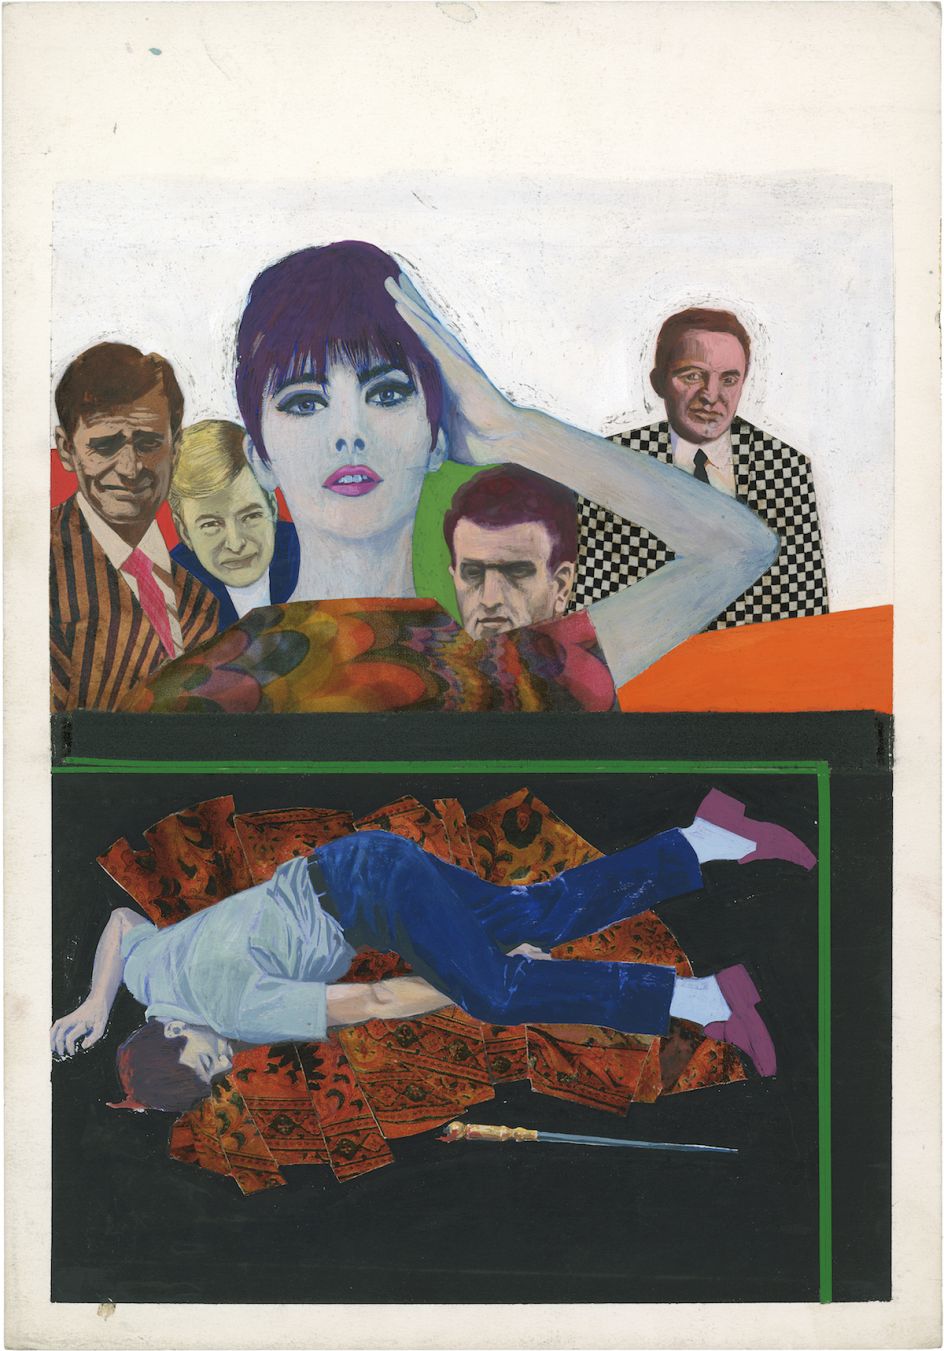 Gianluigi Coppola, The Case of the Curious Bride, 1966, mixed media, copyright Lever Gallery